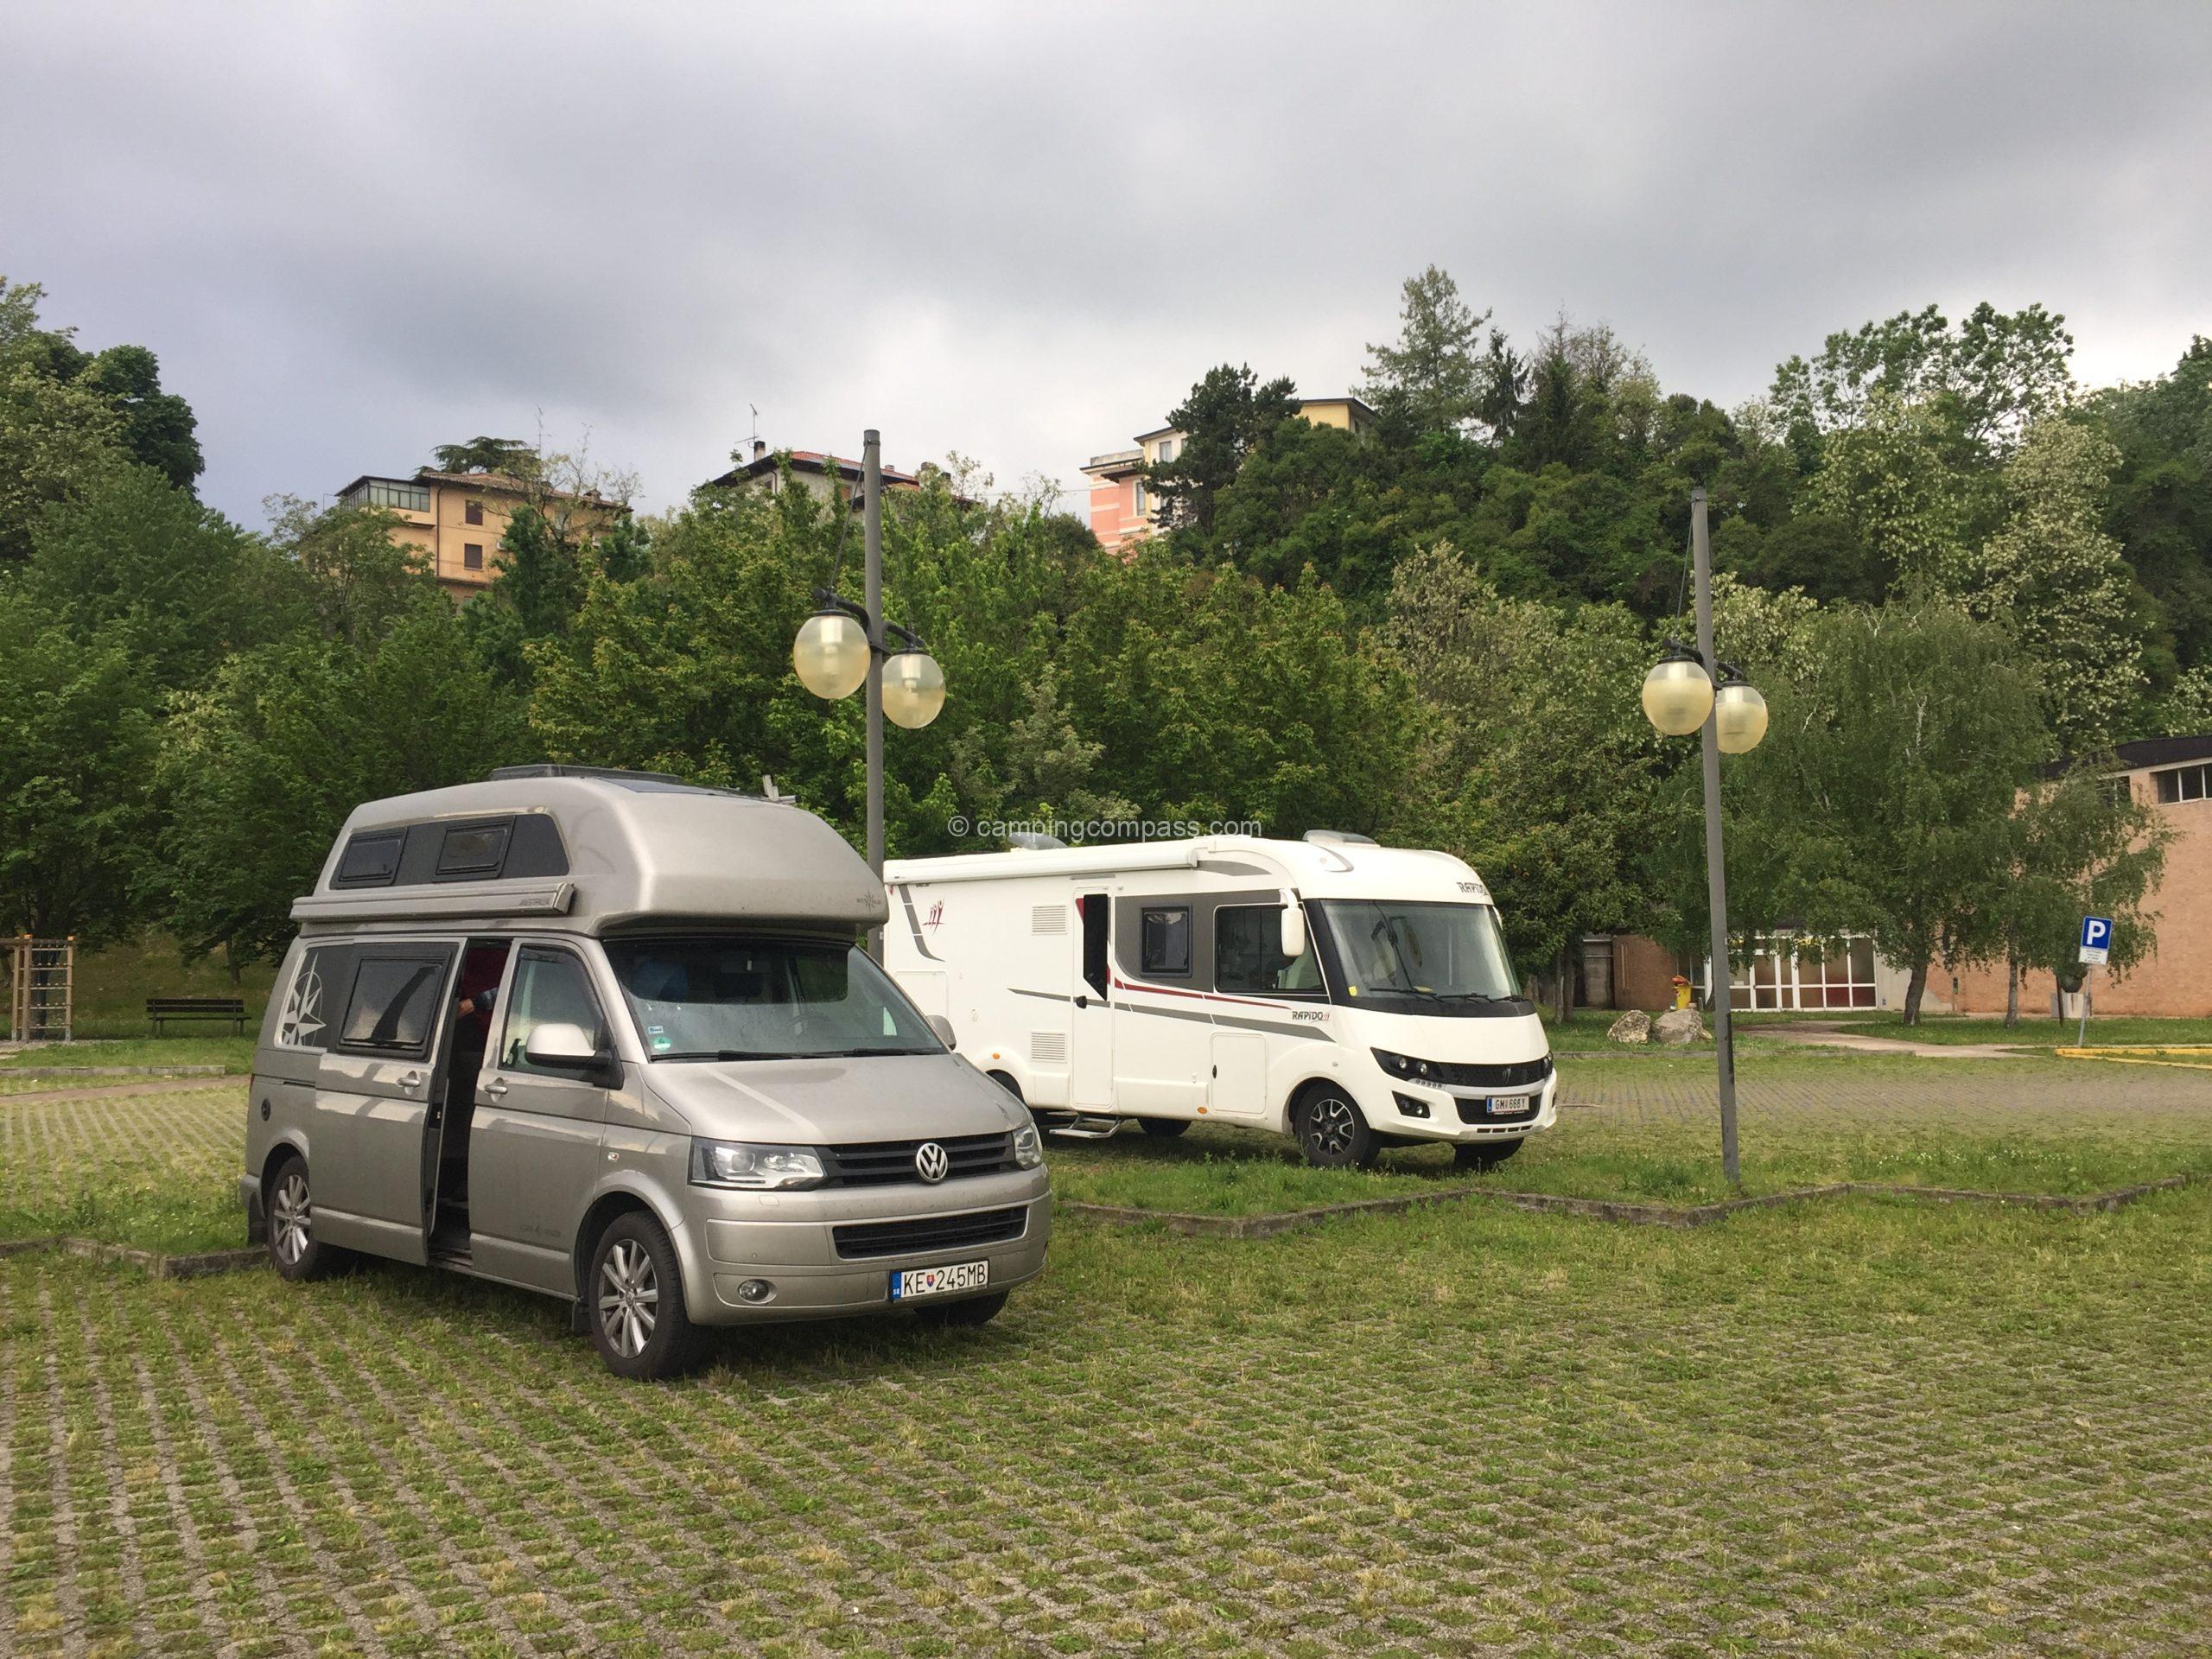 Parking in San Daniele del Friuli